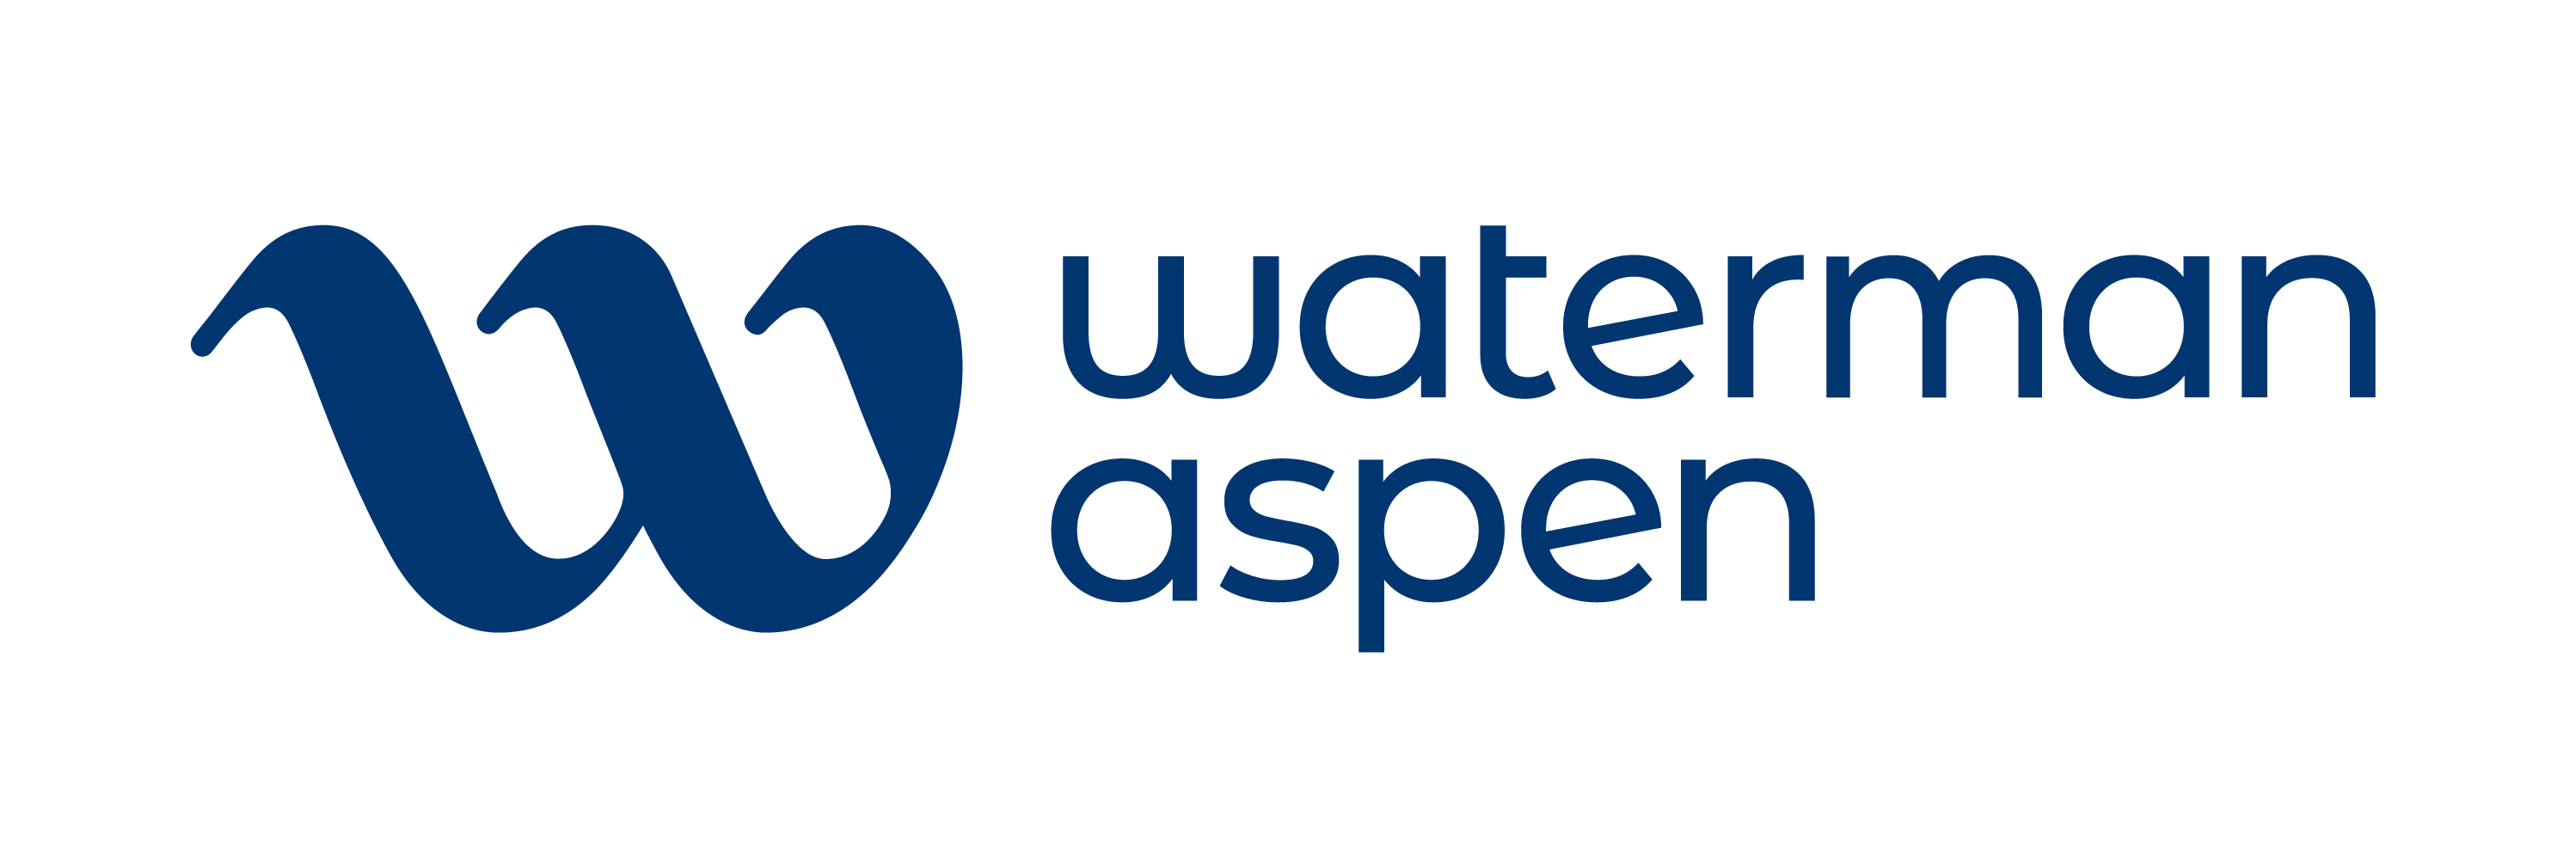 logo for Waterman Aspen Limited